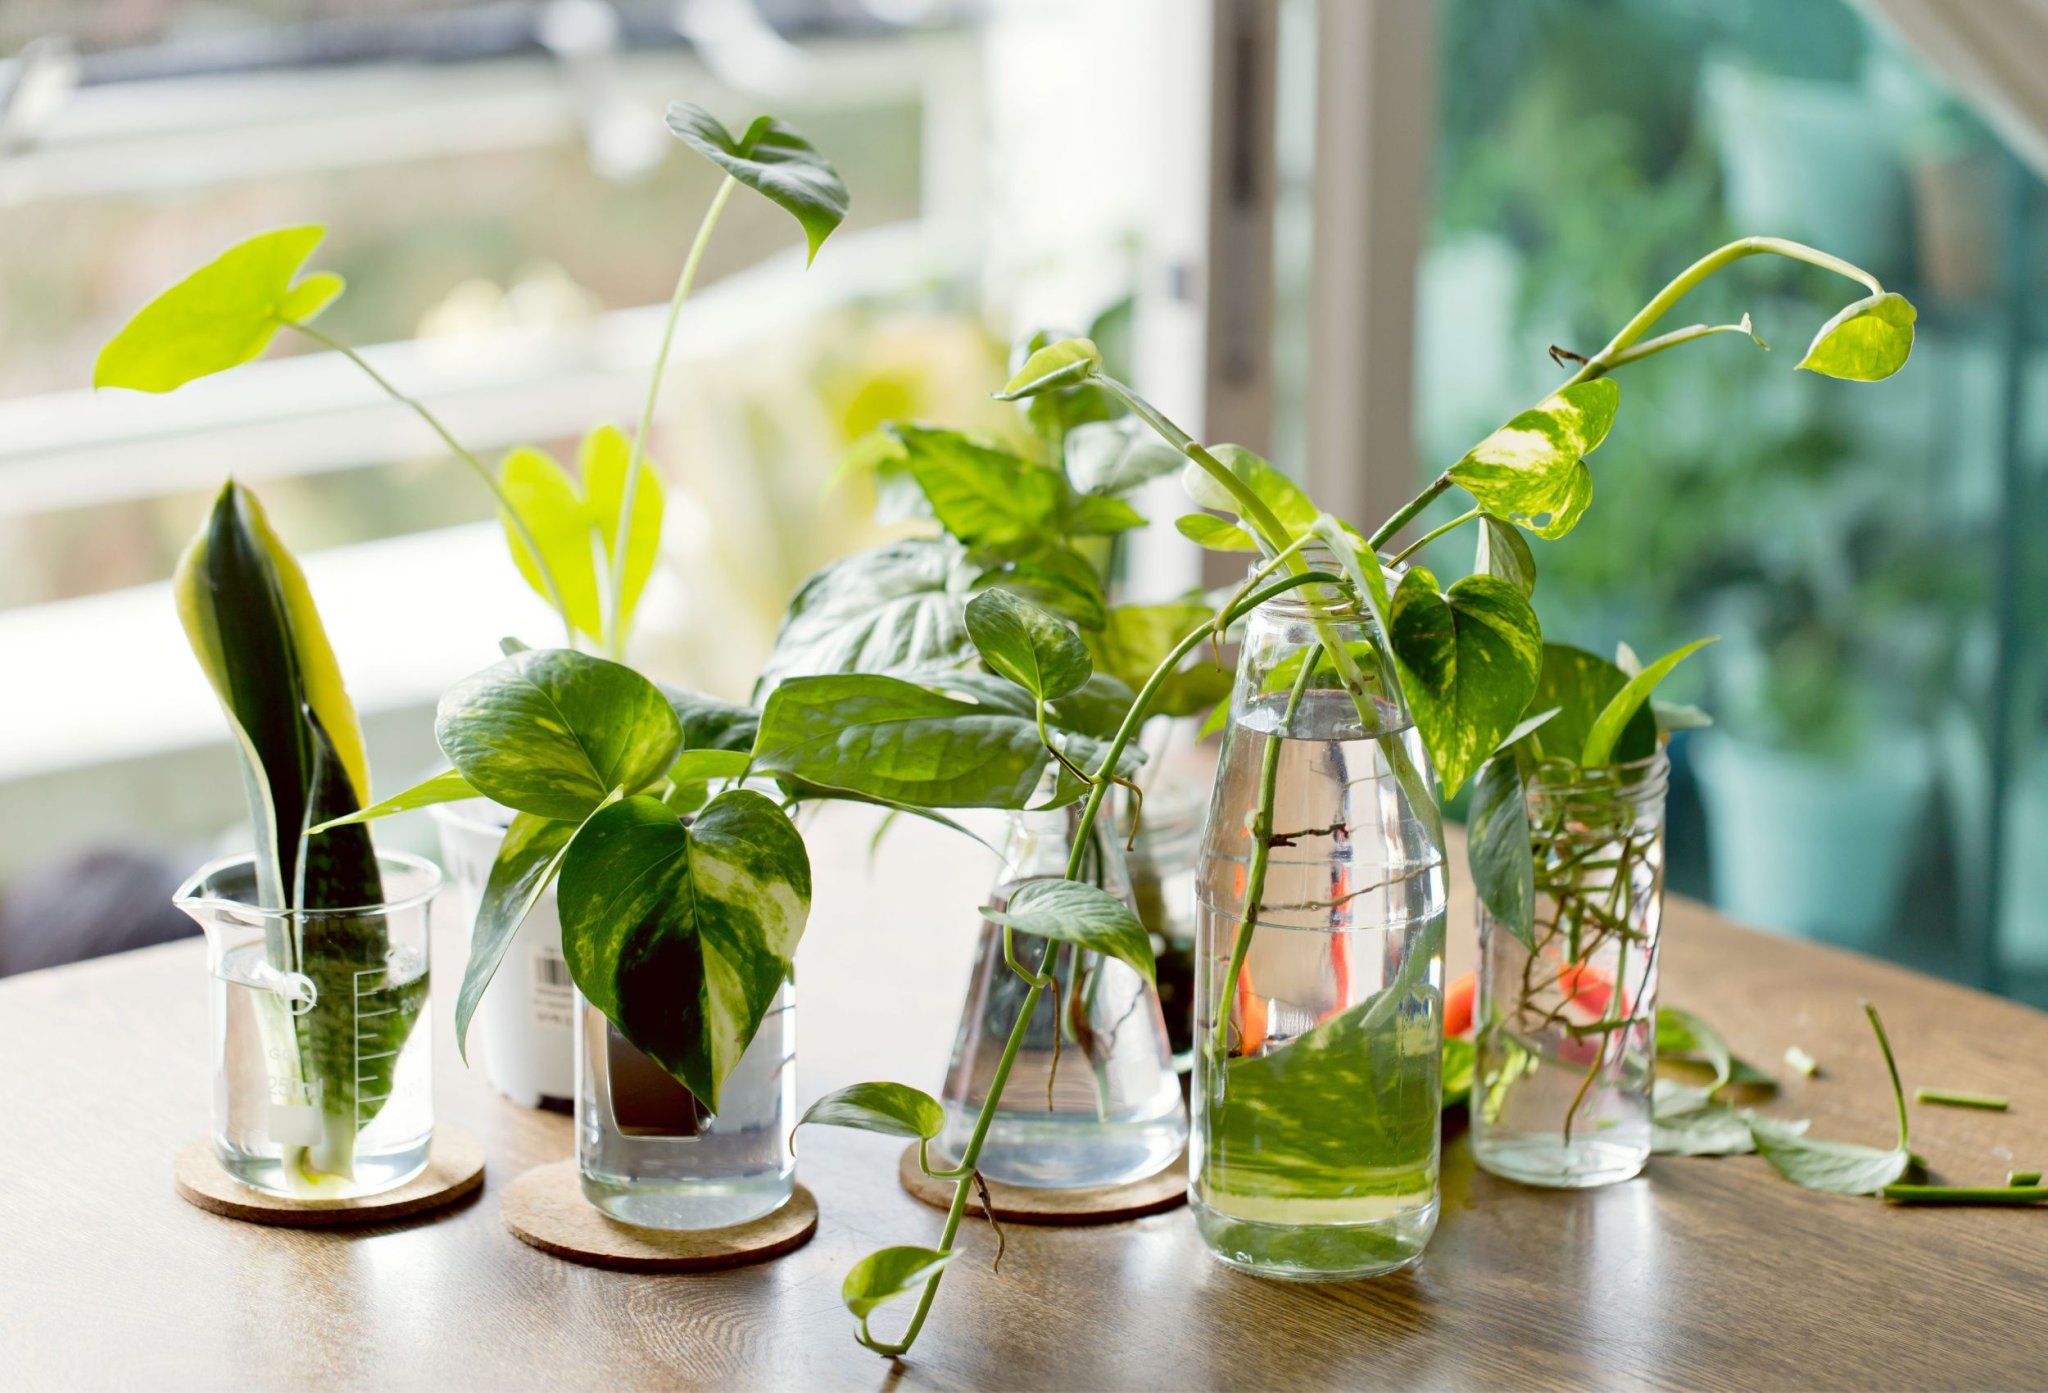 8 Amazing Indoor Plants You Can Grow in Water